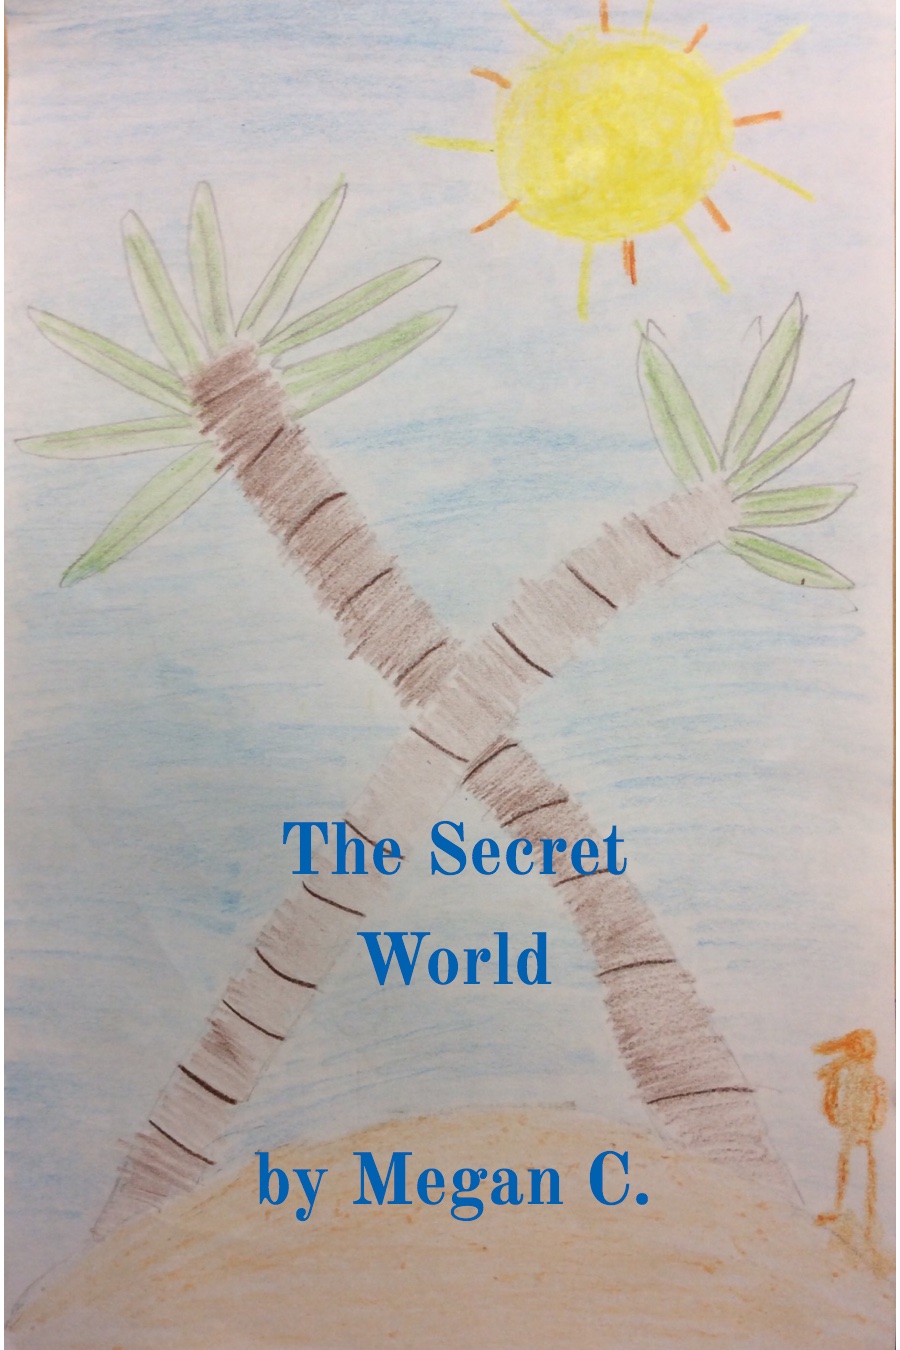 The sercret world by Megan C